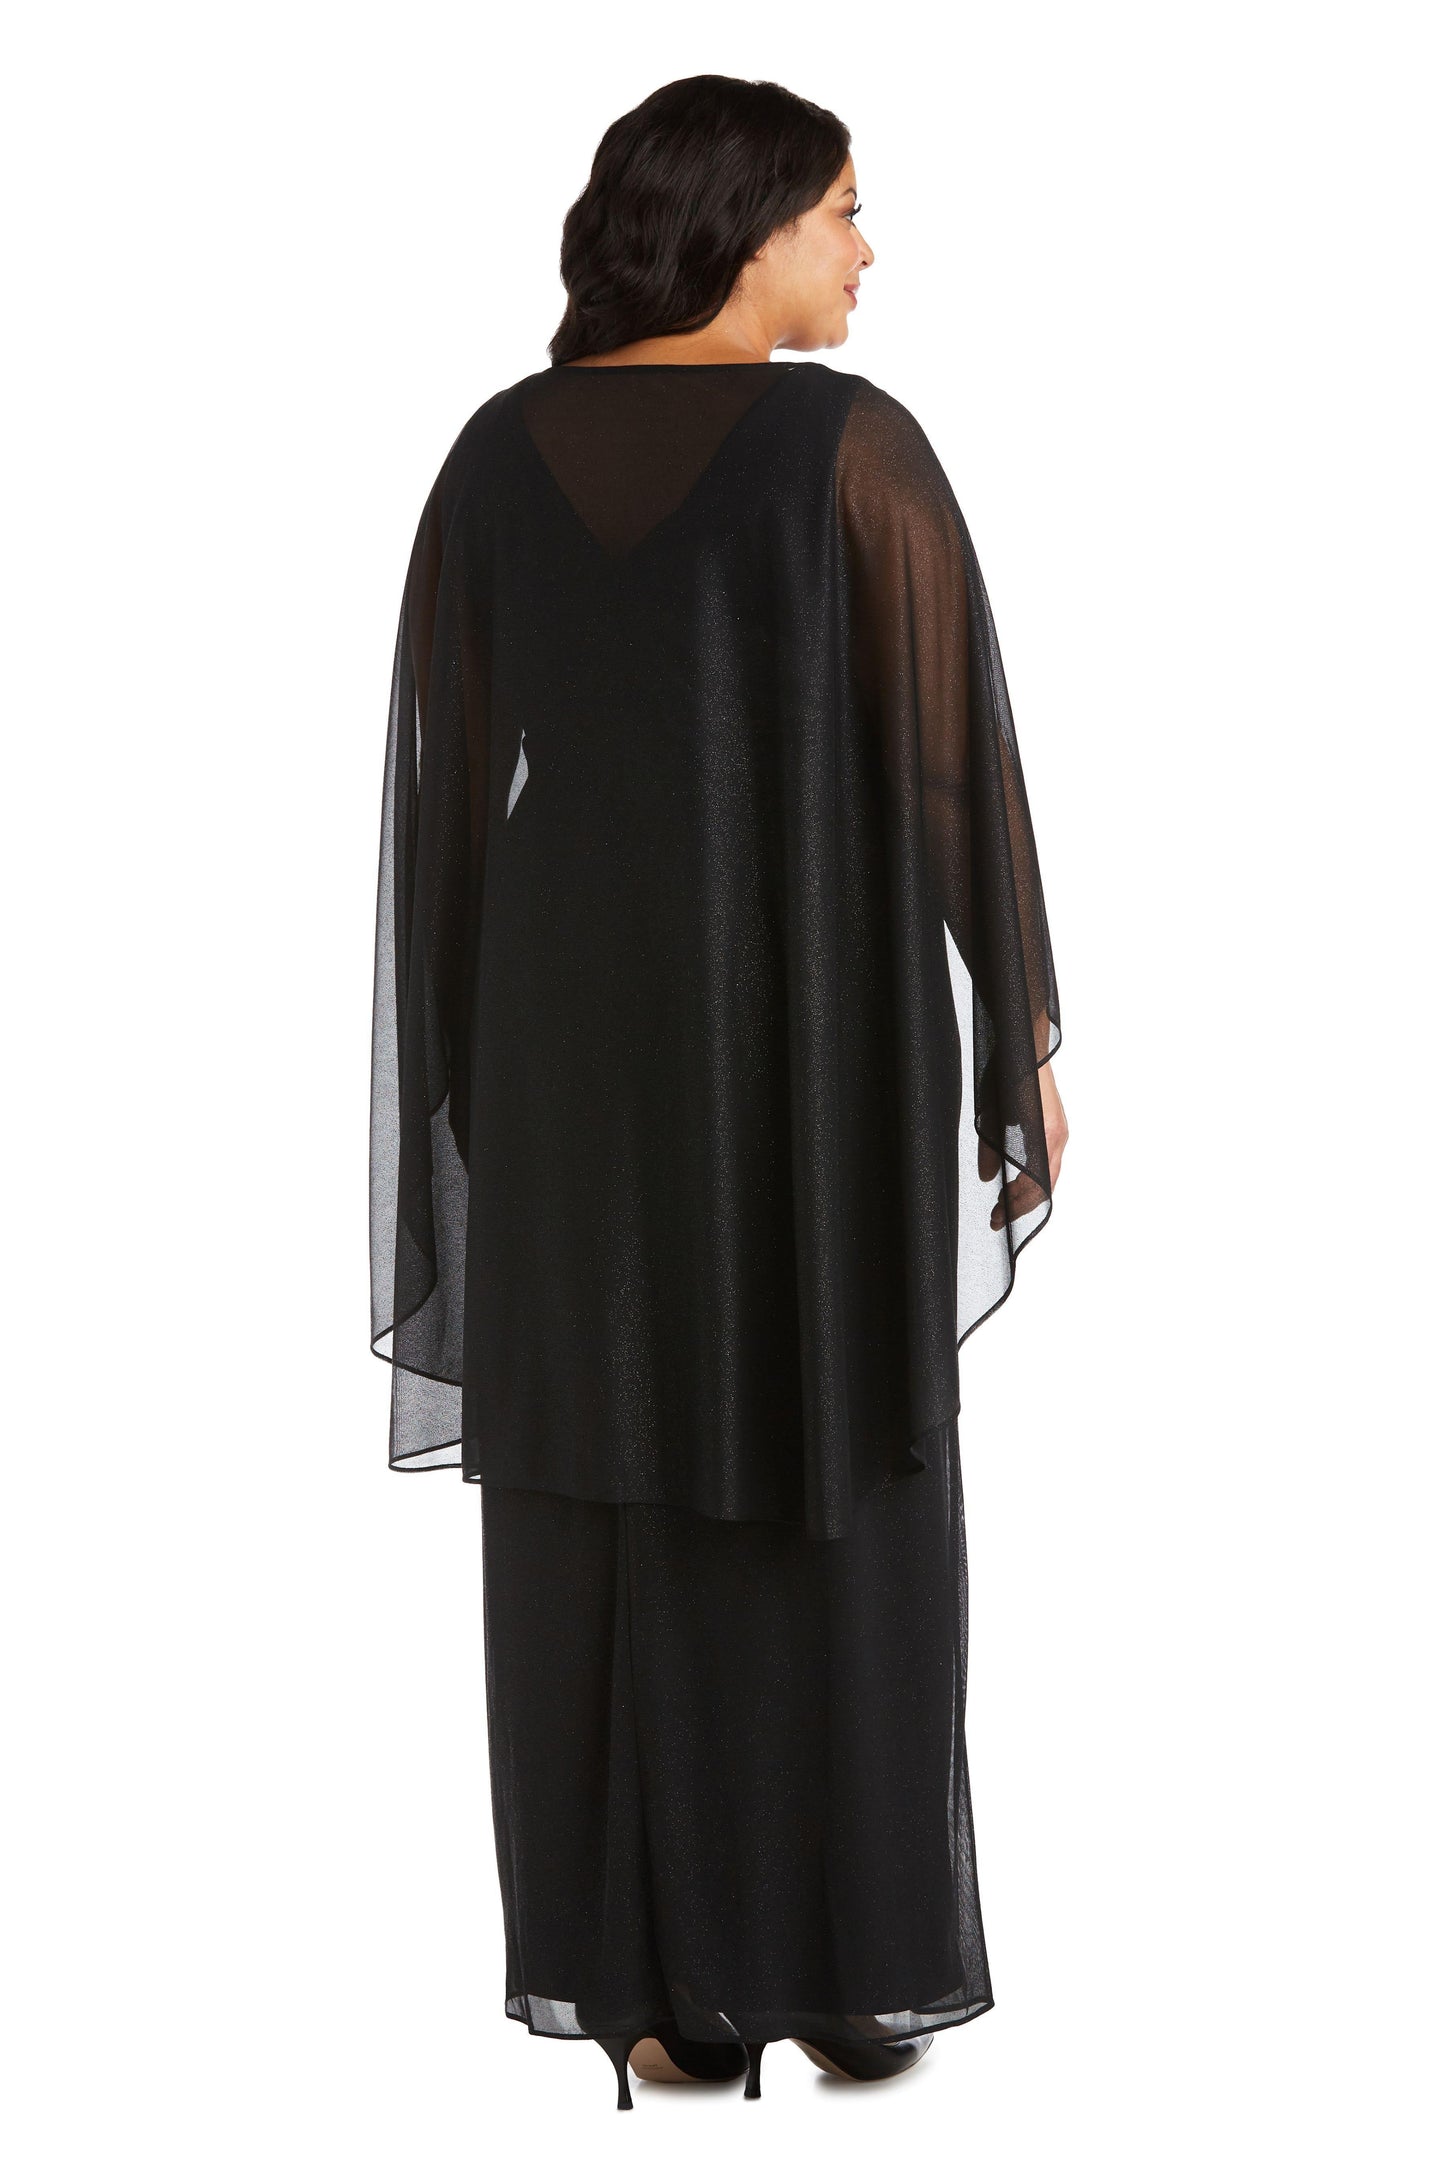 R&M Richards Long Plus Size Formal Cape Gown 2384W - The Dress Outlet